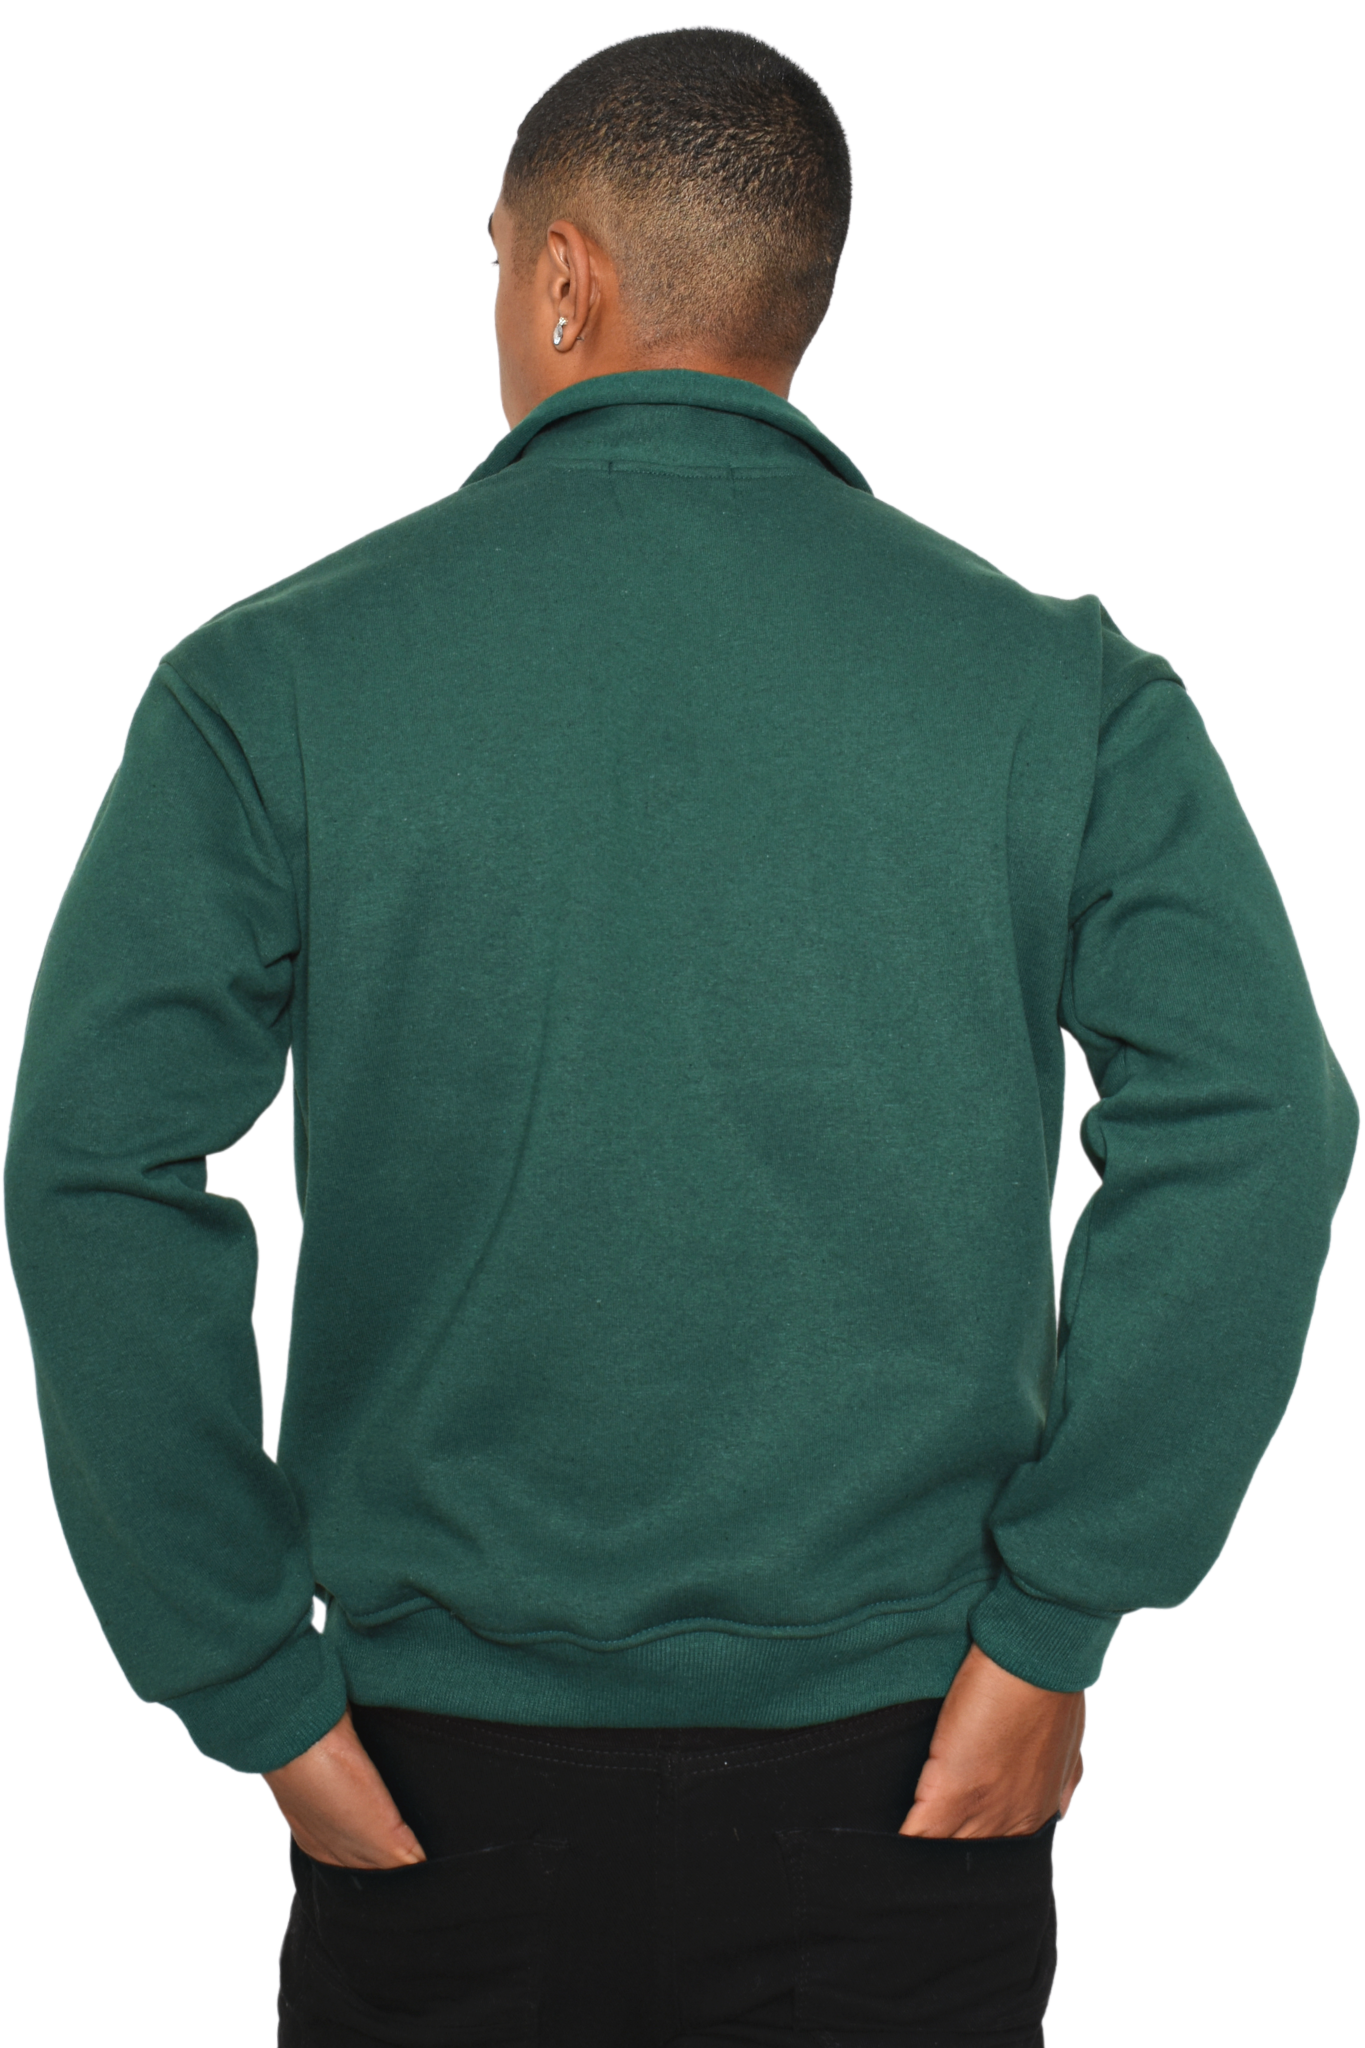 Sudadera zipper verde